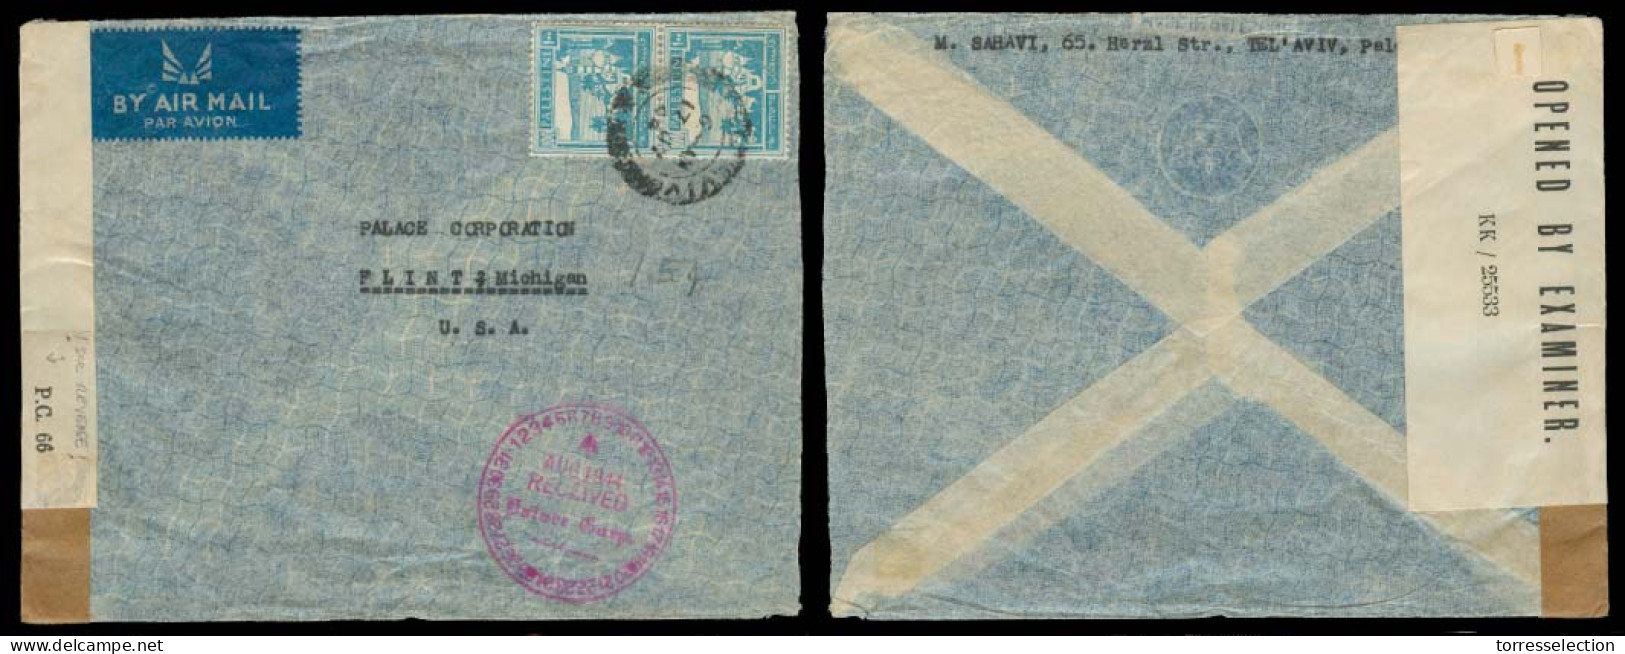 PALESTINE. 1944 (17 July). Tel Aviv - USA. Air Fkd + Censor Label / KK - 25533. - Palestine